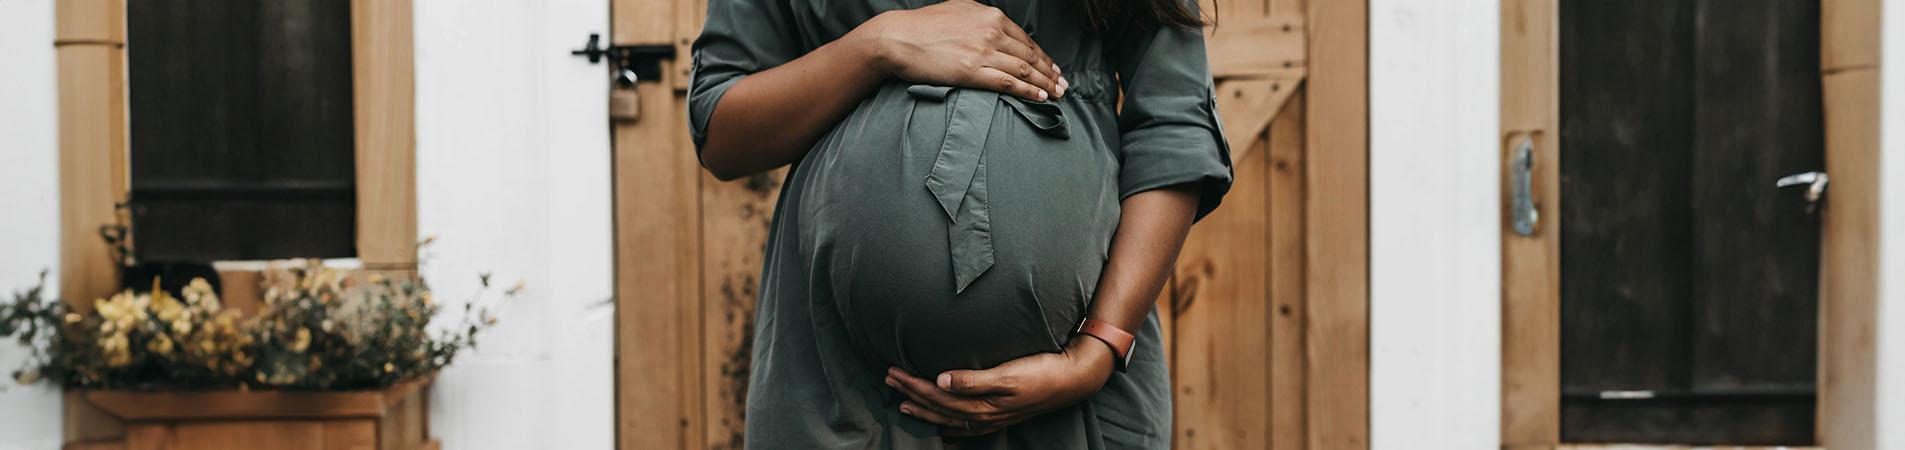 Pregnant woman thinking on infertility treatments